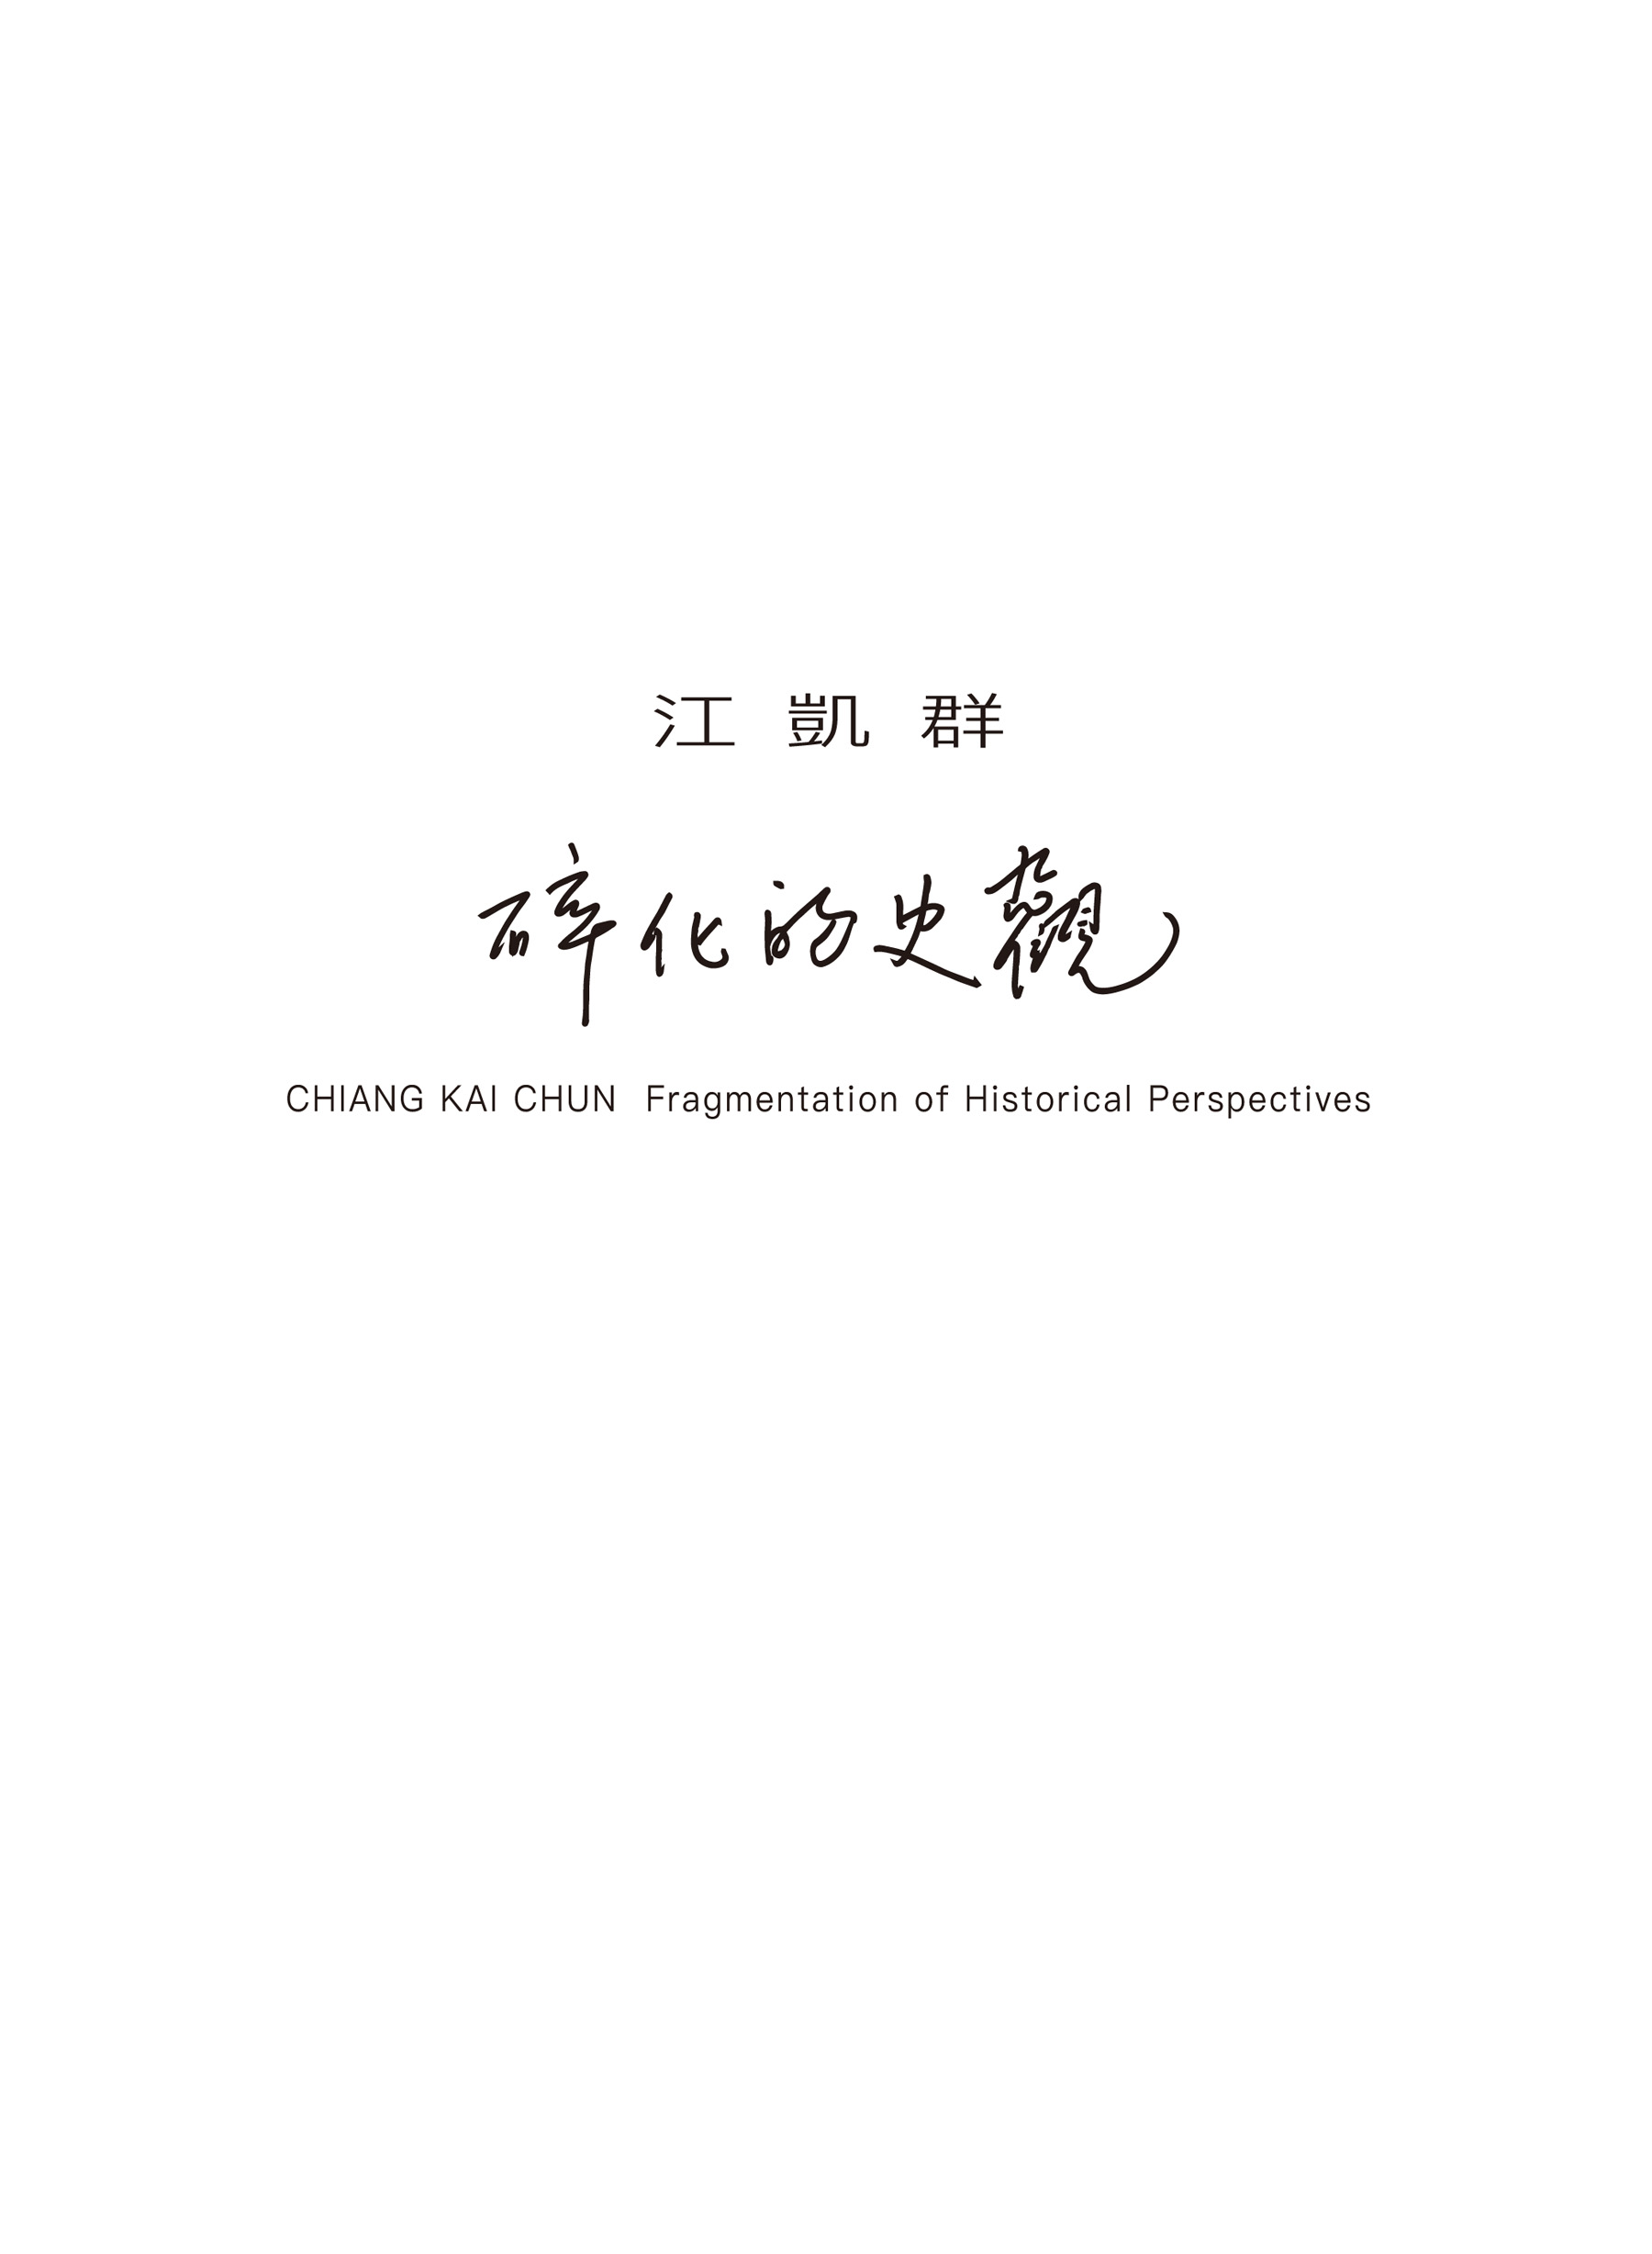 CHIANG KAI CHUN: Fragmentation of Historical Perspectives 的圖說